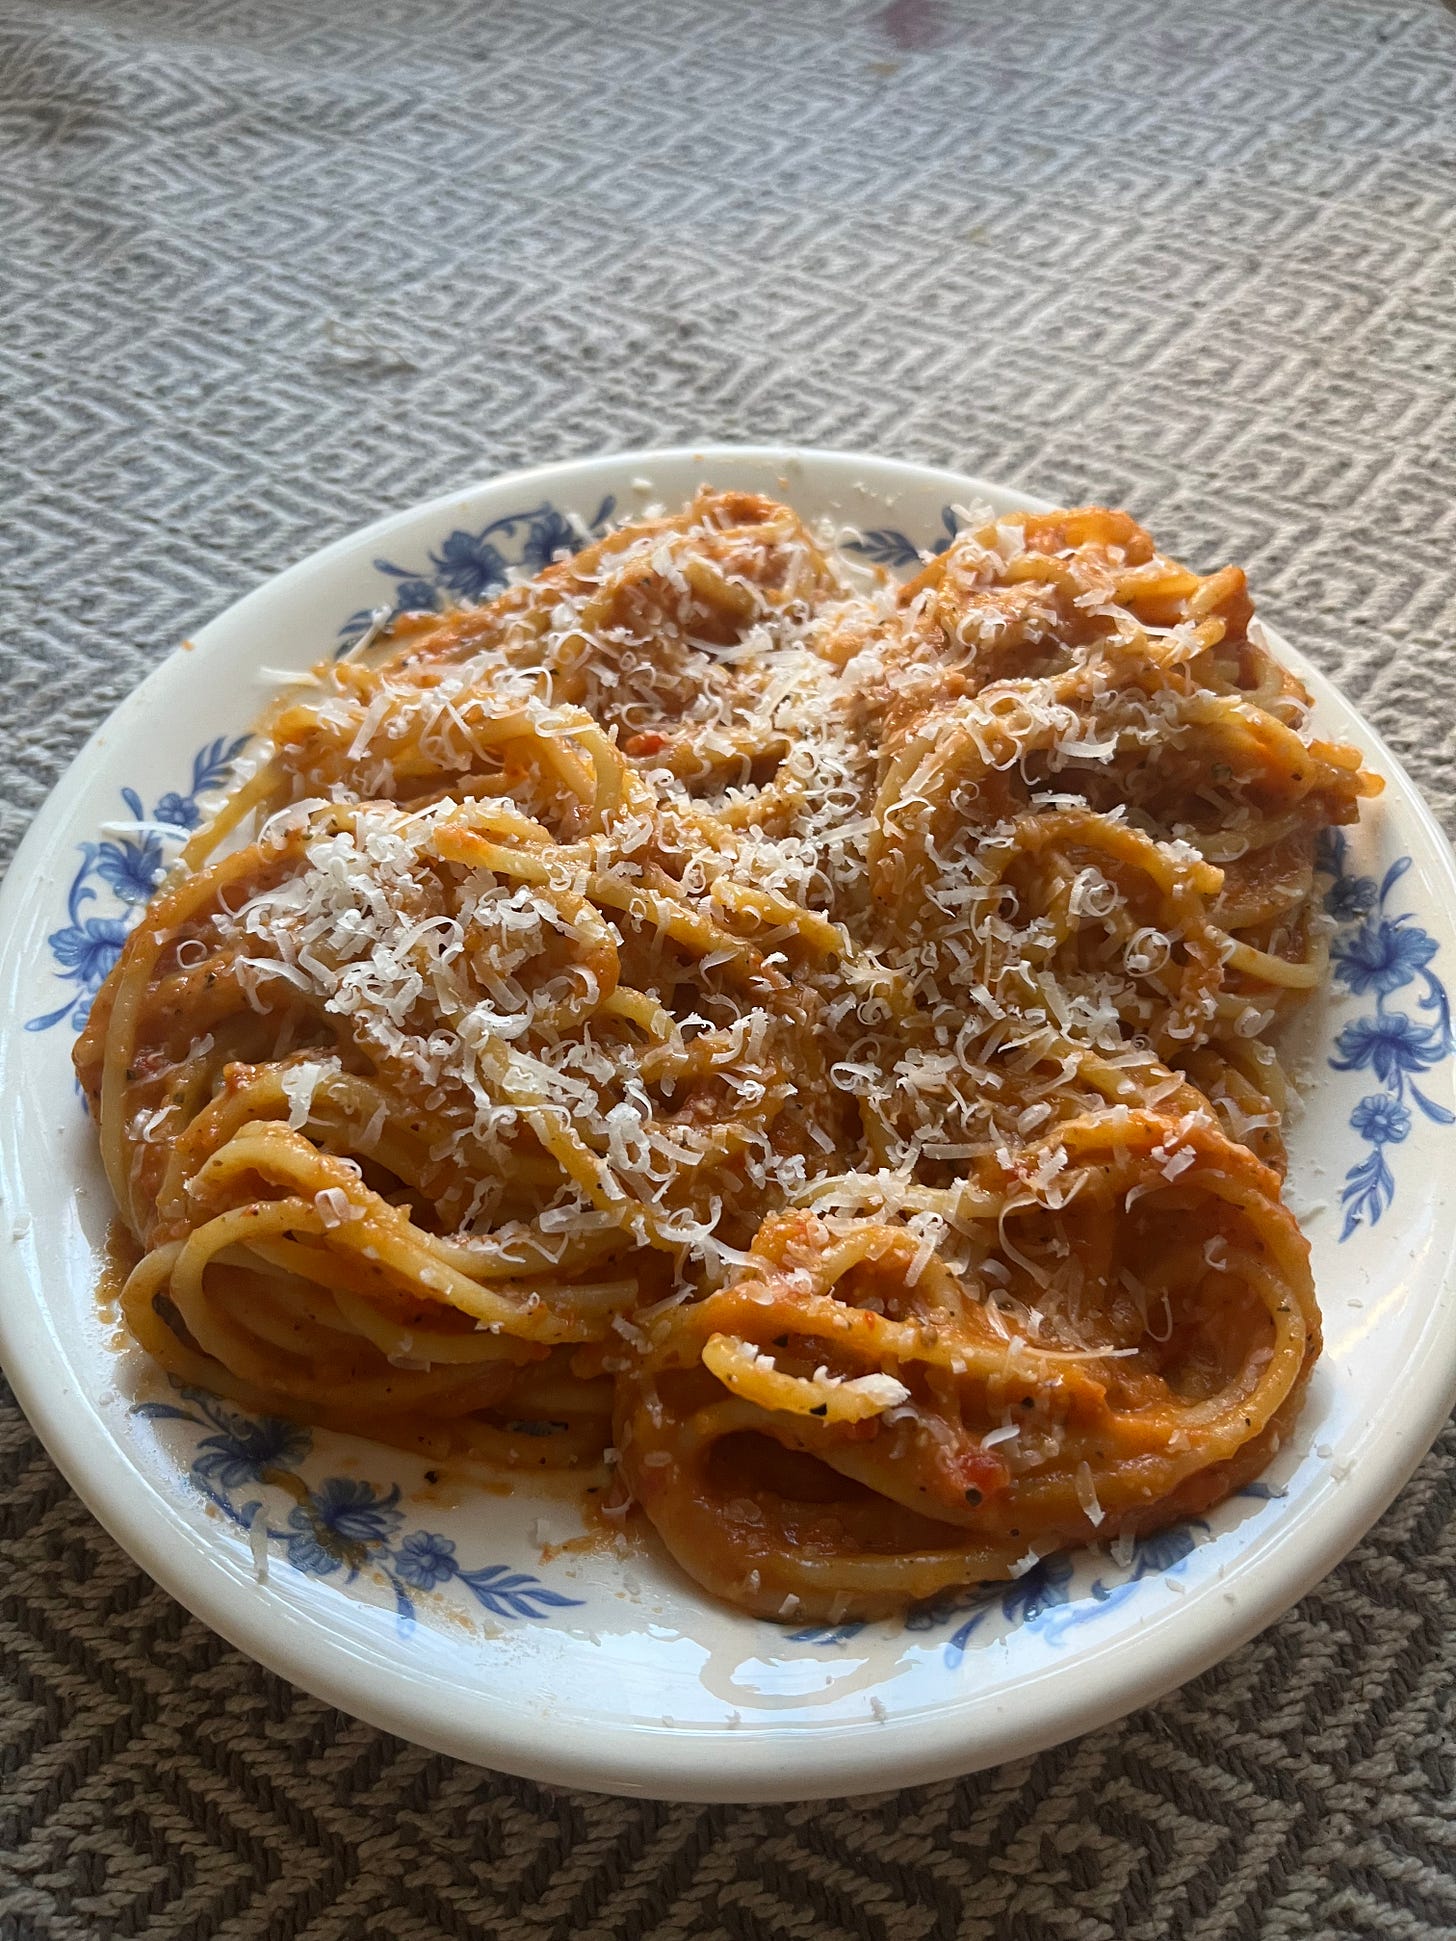 Plate of spaghetti.